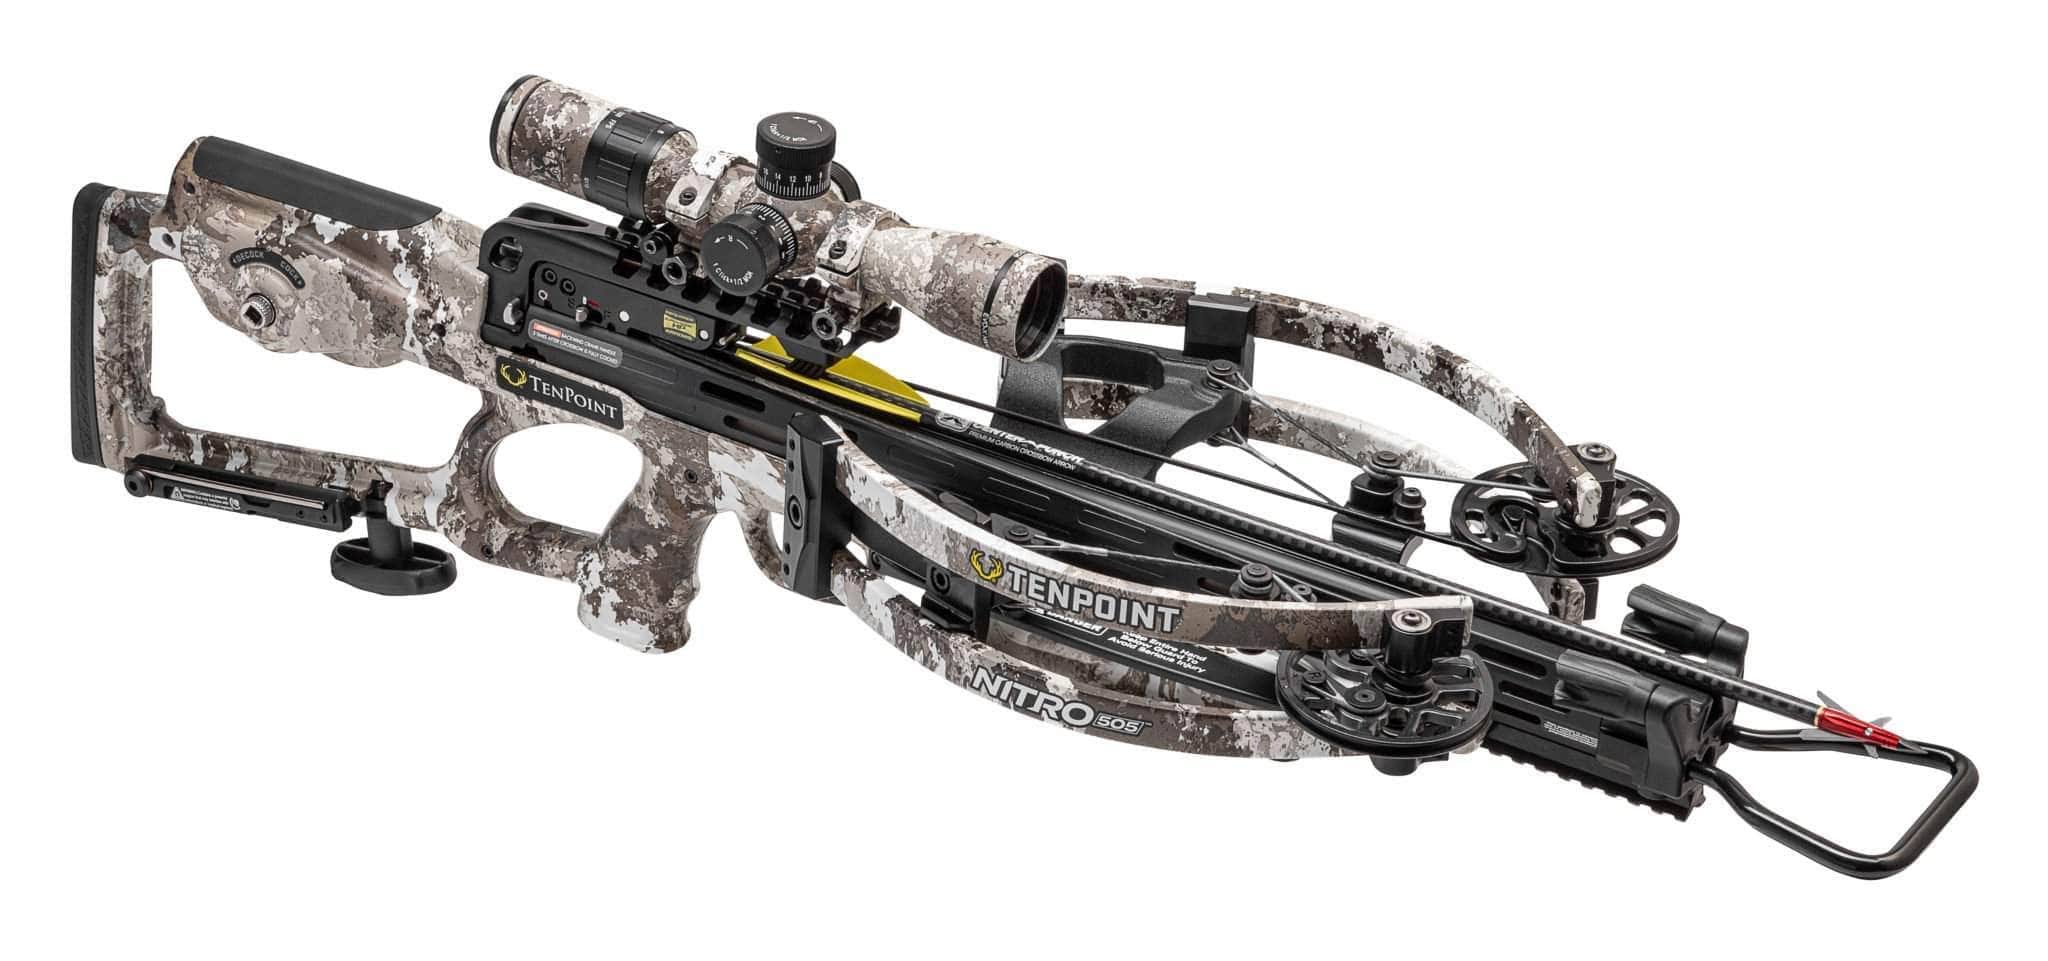 Tenpoint Nitro 505 - Veil Alpine Crossbow